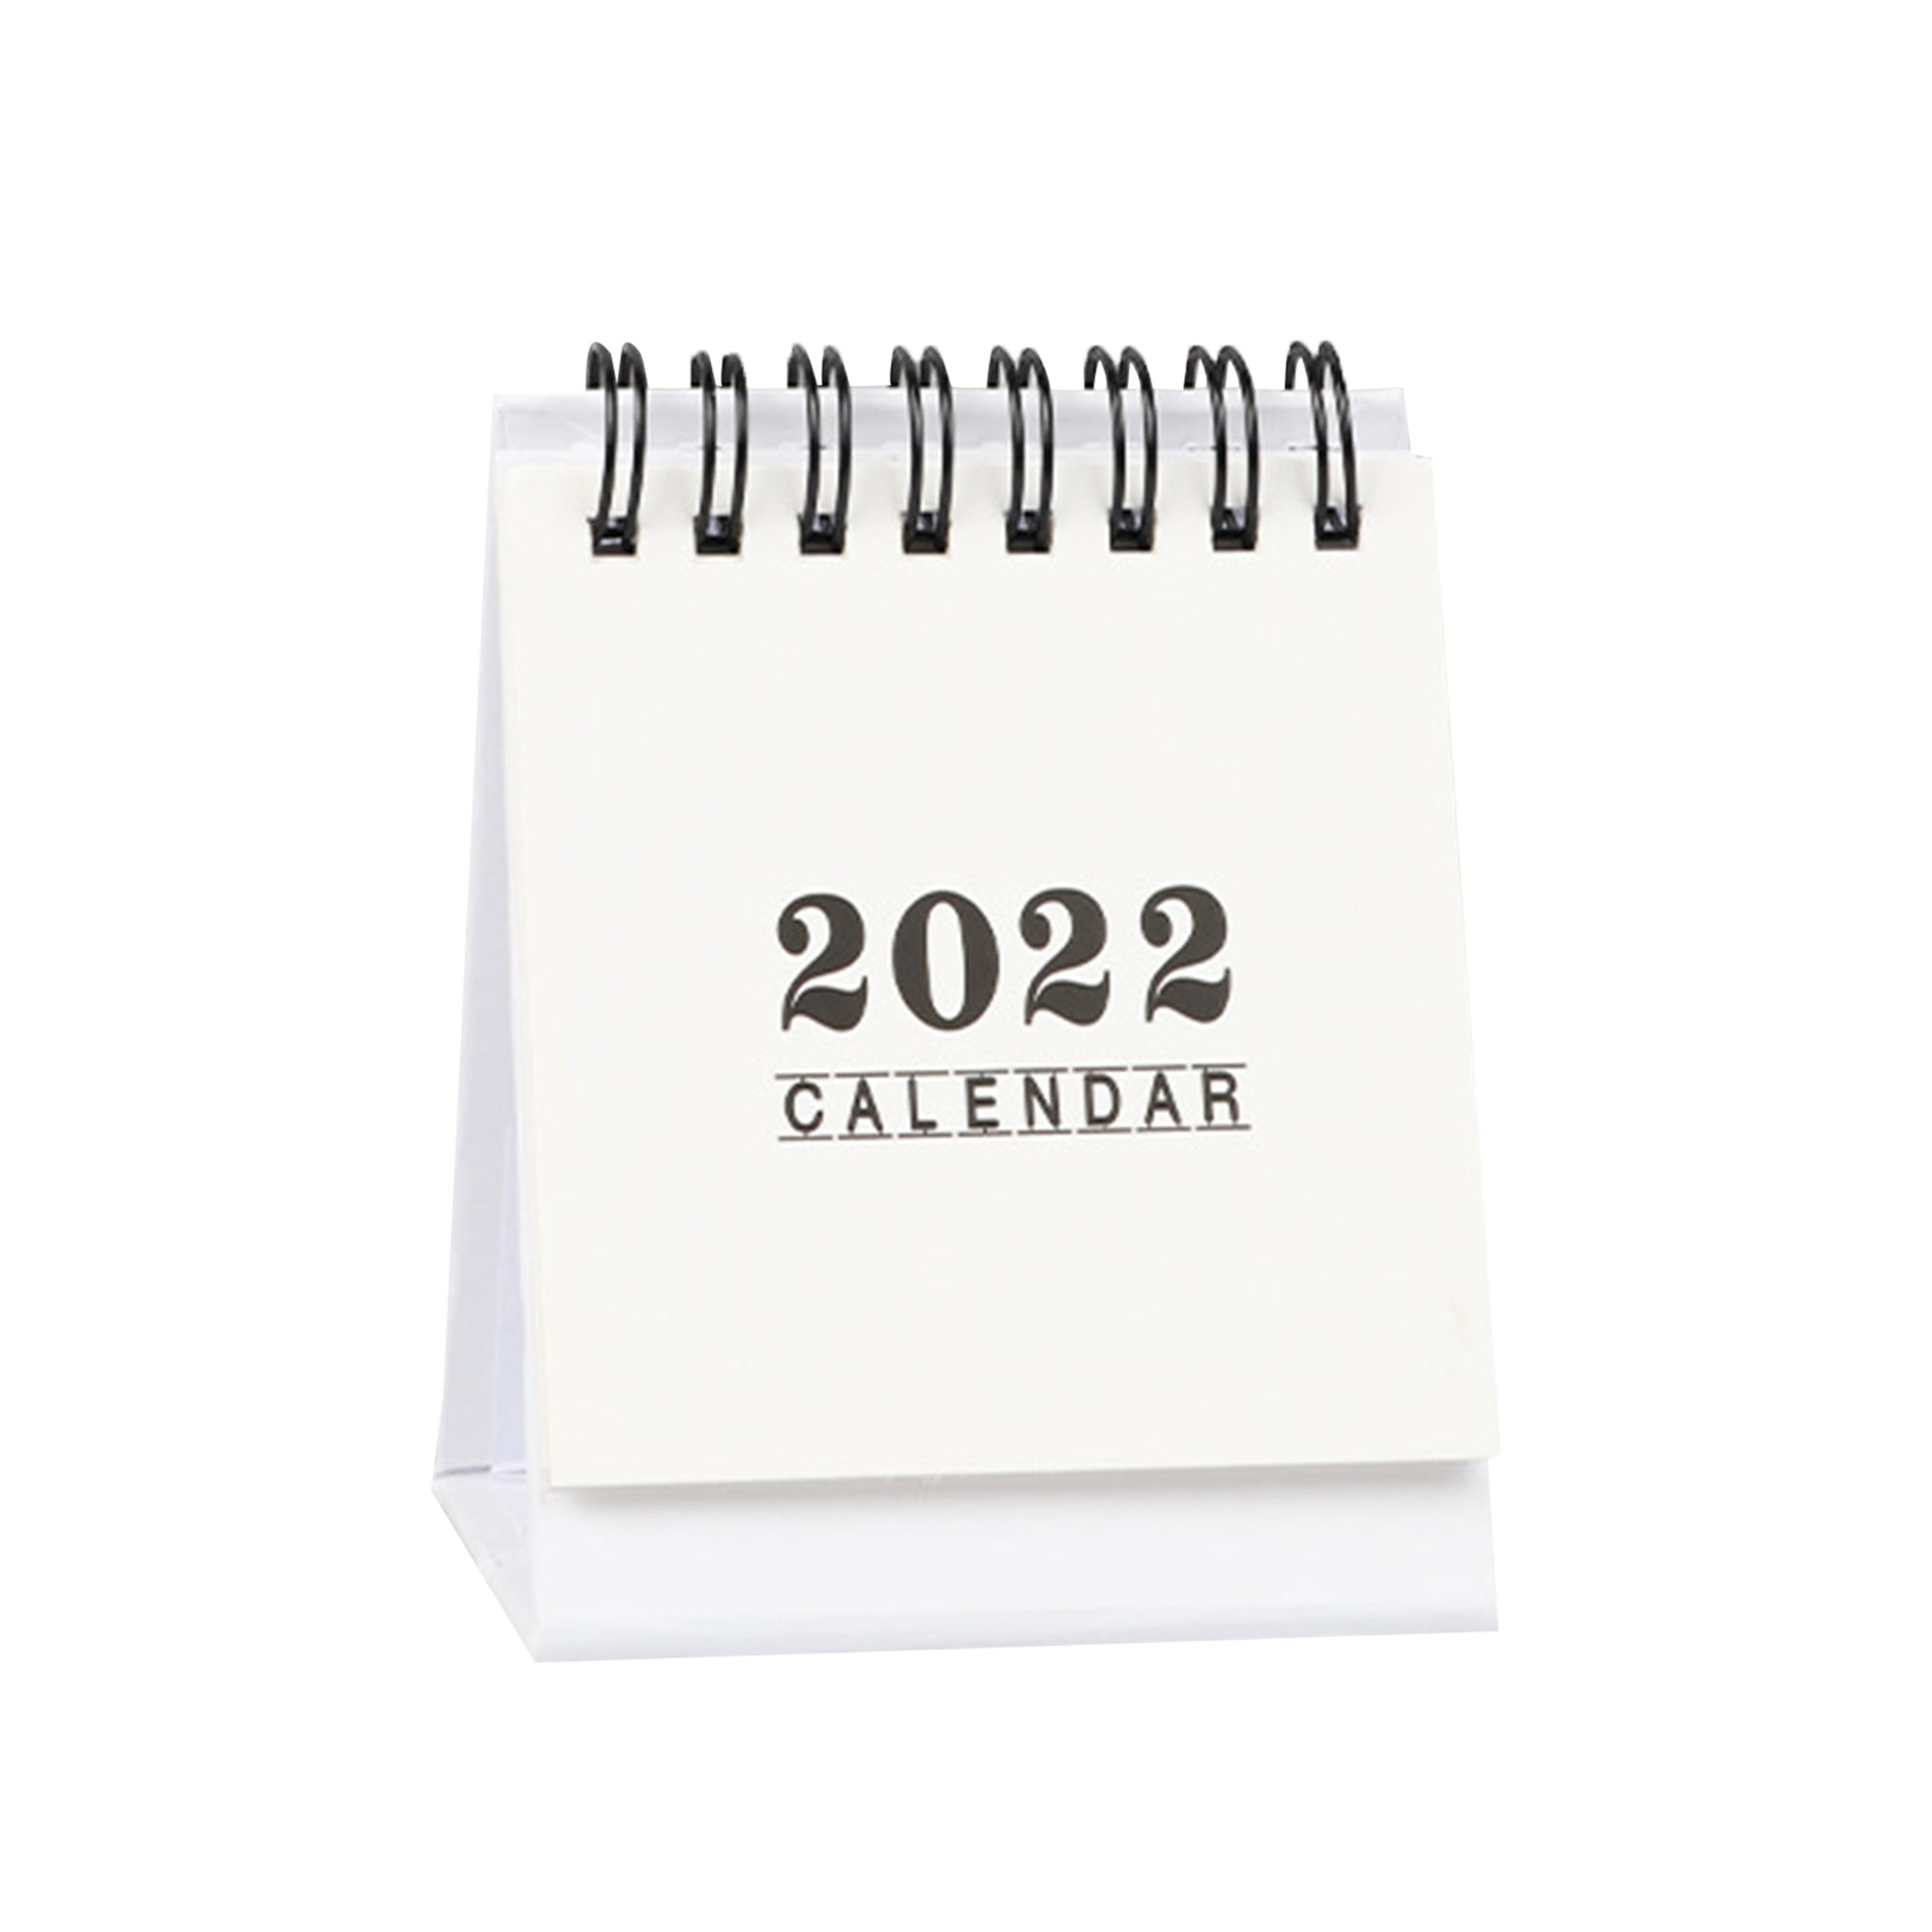 Use December 2020 to February 2022 Floral 9.5 x 8in Creproly Desk Calendar 2021 Academic Standing Cute Desktop Flip Calendar on Easel Monthly Planner Calendar 